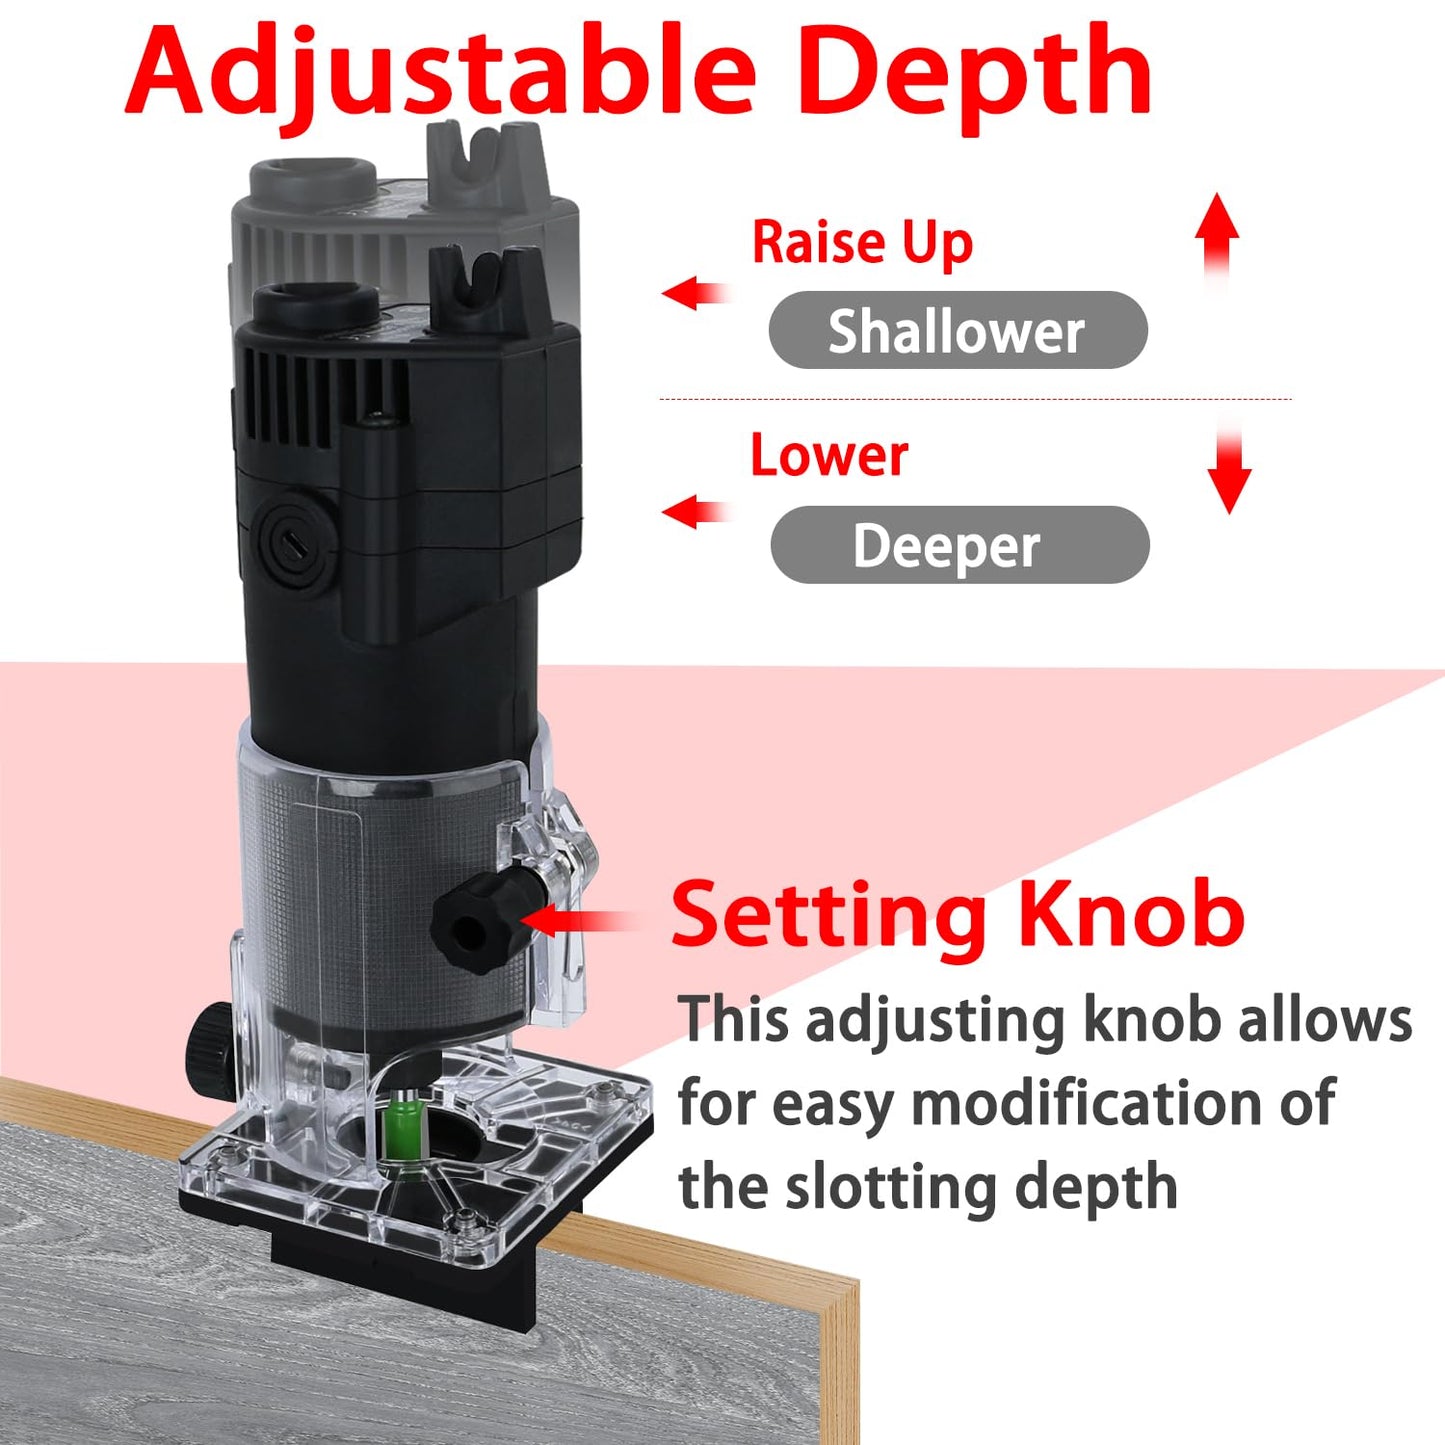 2-in-1 Invisible Fastener Slotting Bracket & Woodworking Router Base - Adjustable Mortising Jig & Trimmer Base for Furniture Assembly, Compatible